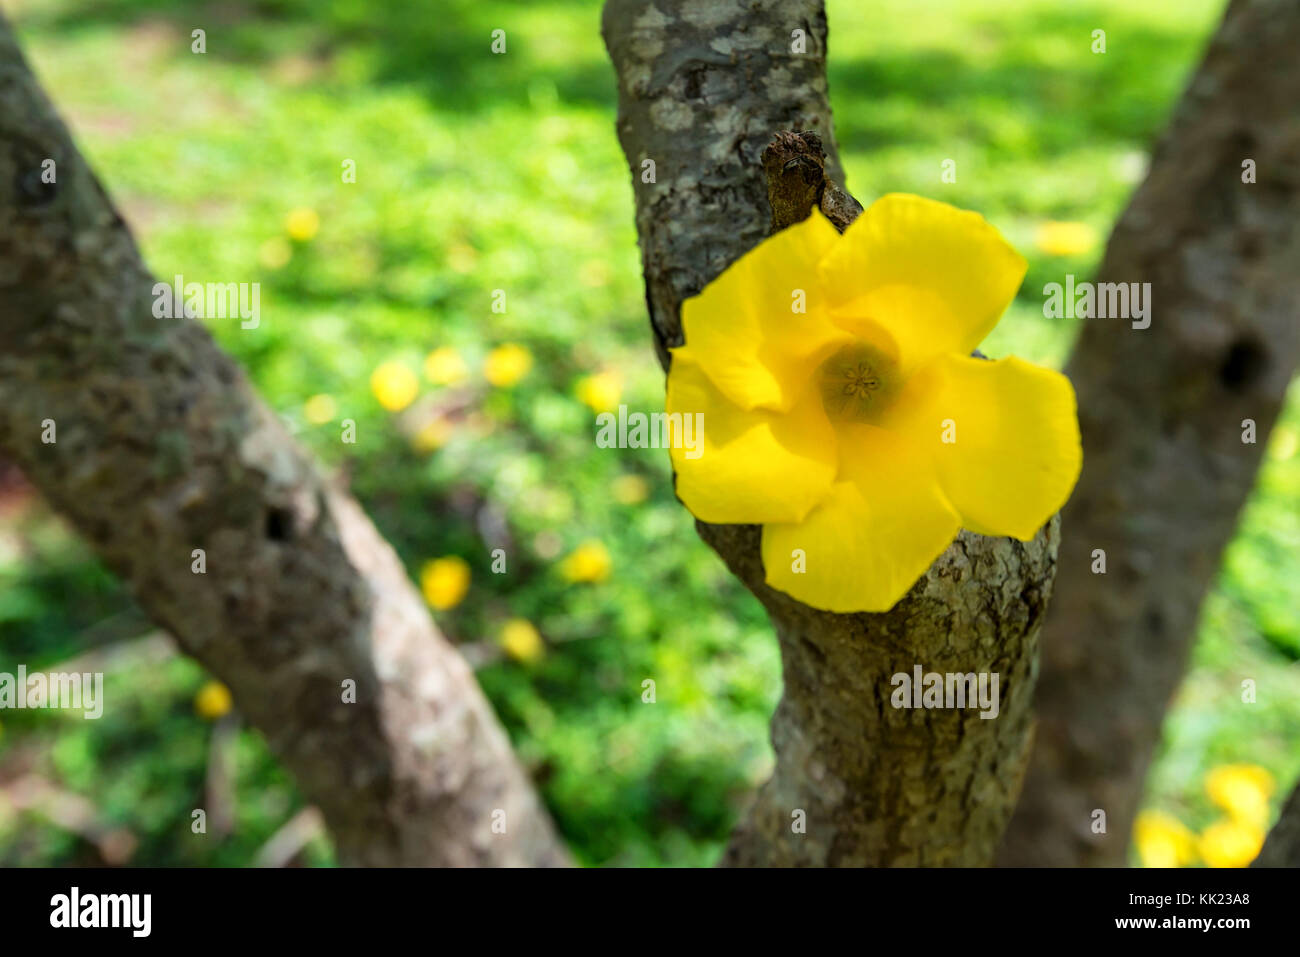 Yellow Cascabela thevetia flower in nature garden Stock Photo